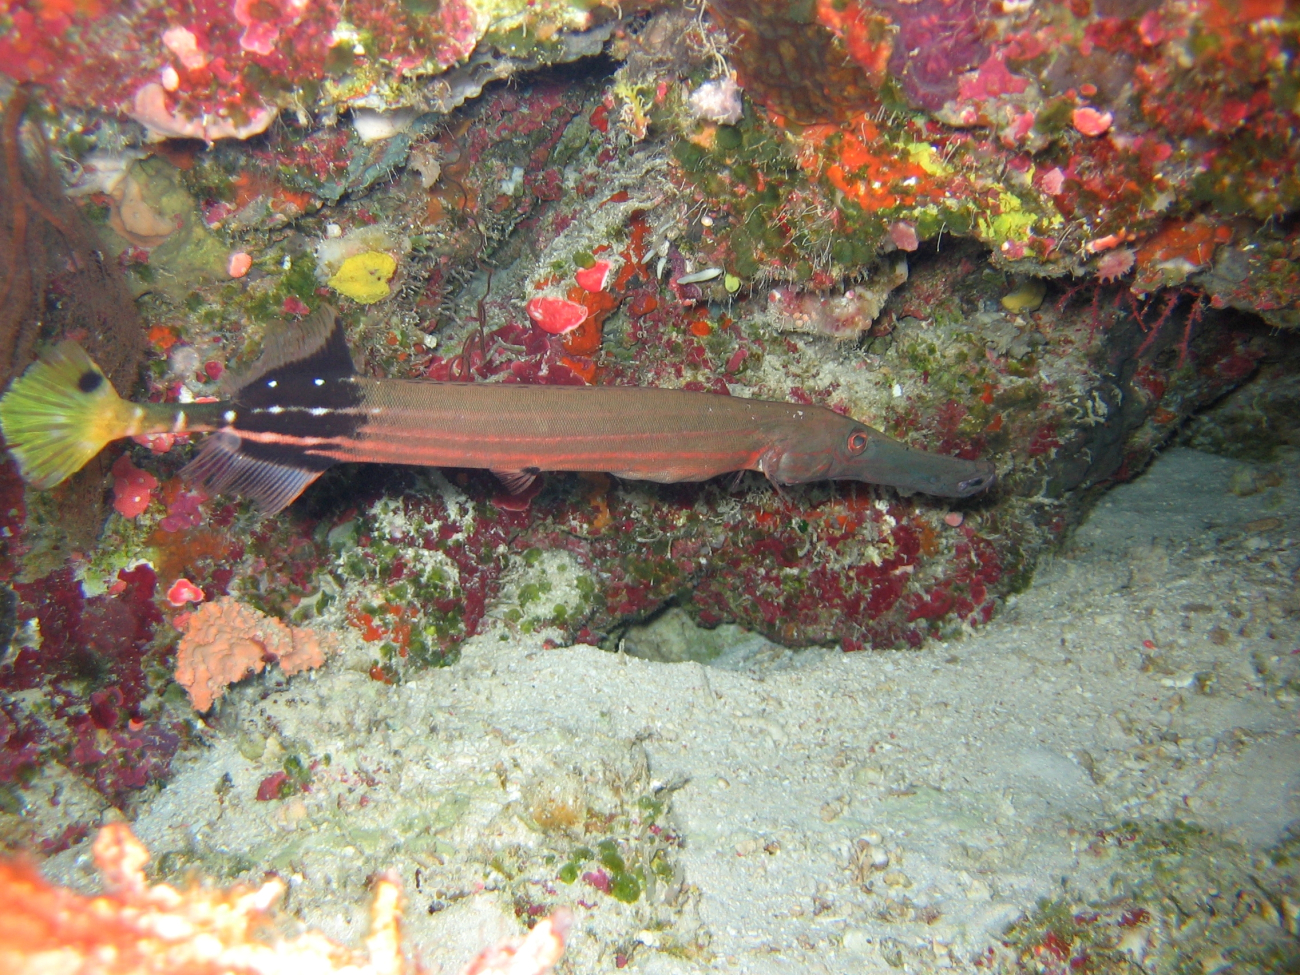 Trumpetfish (Aulostomus sp